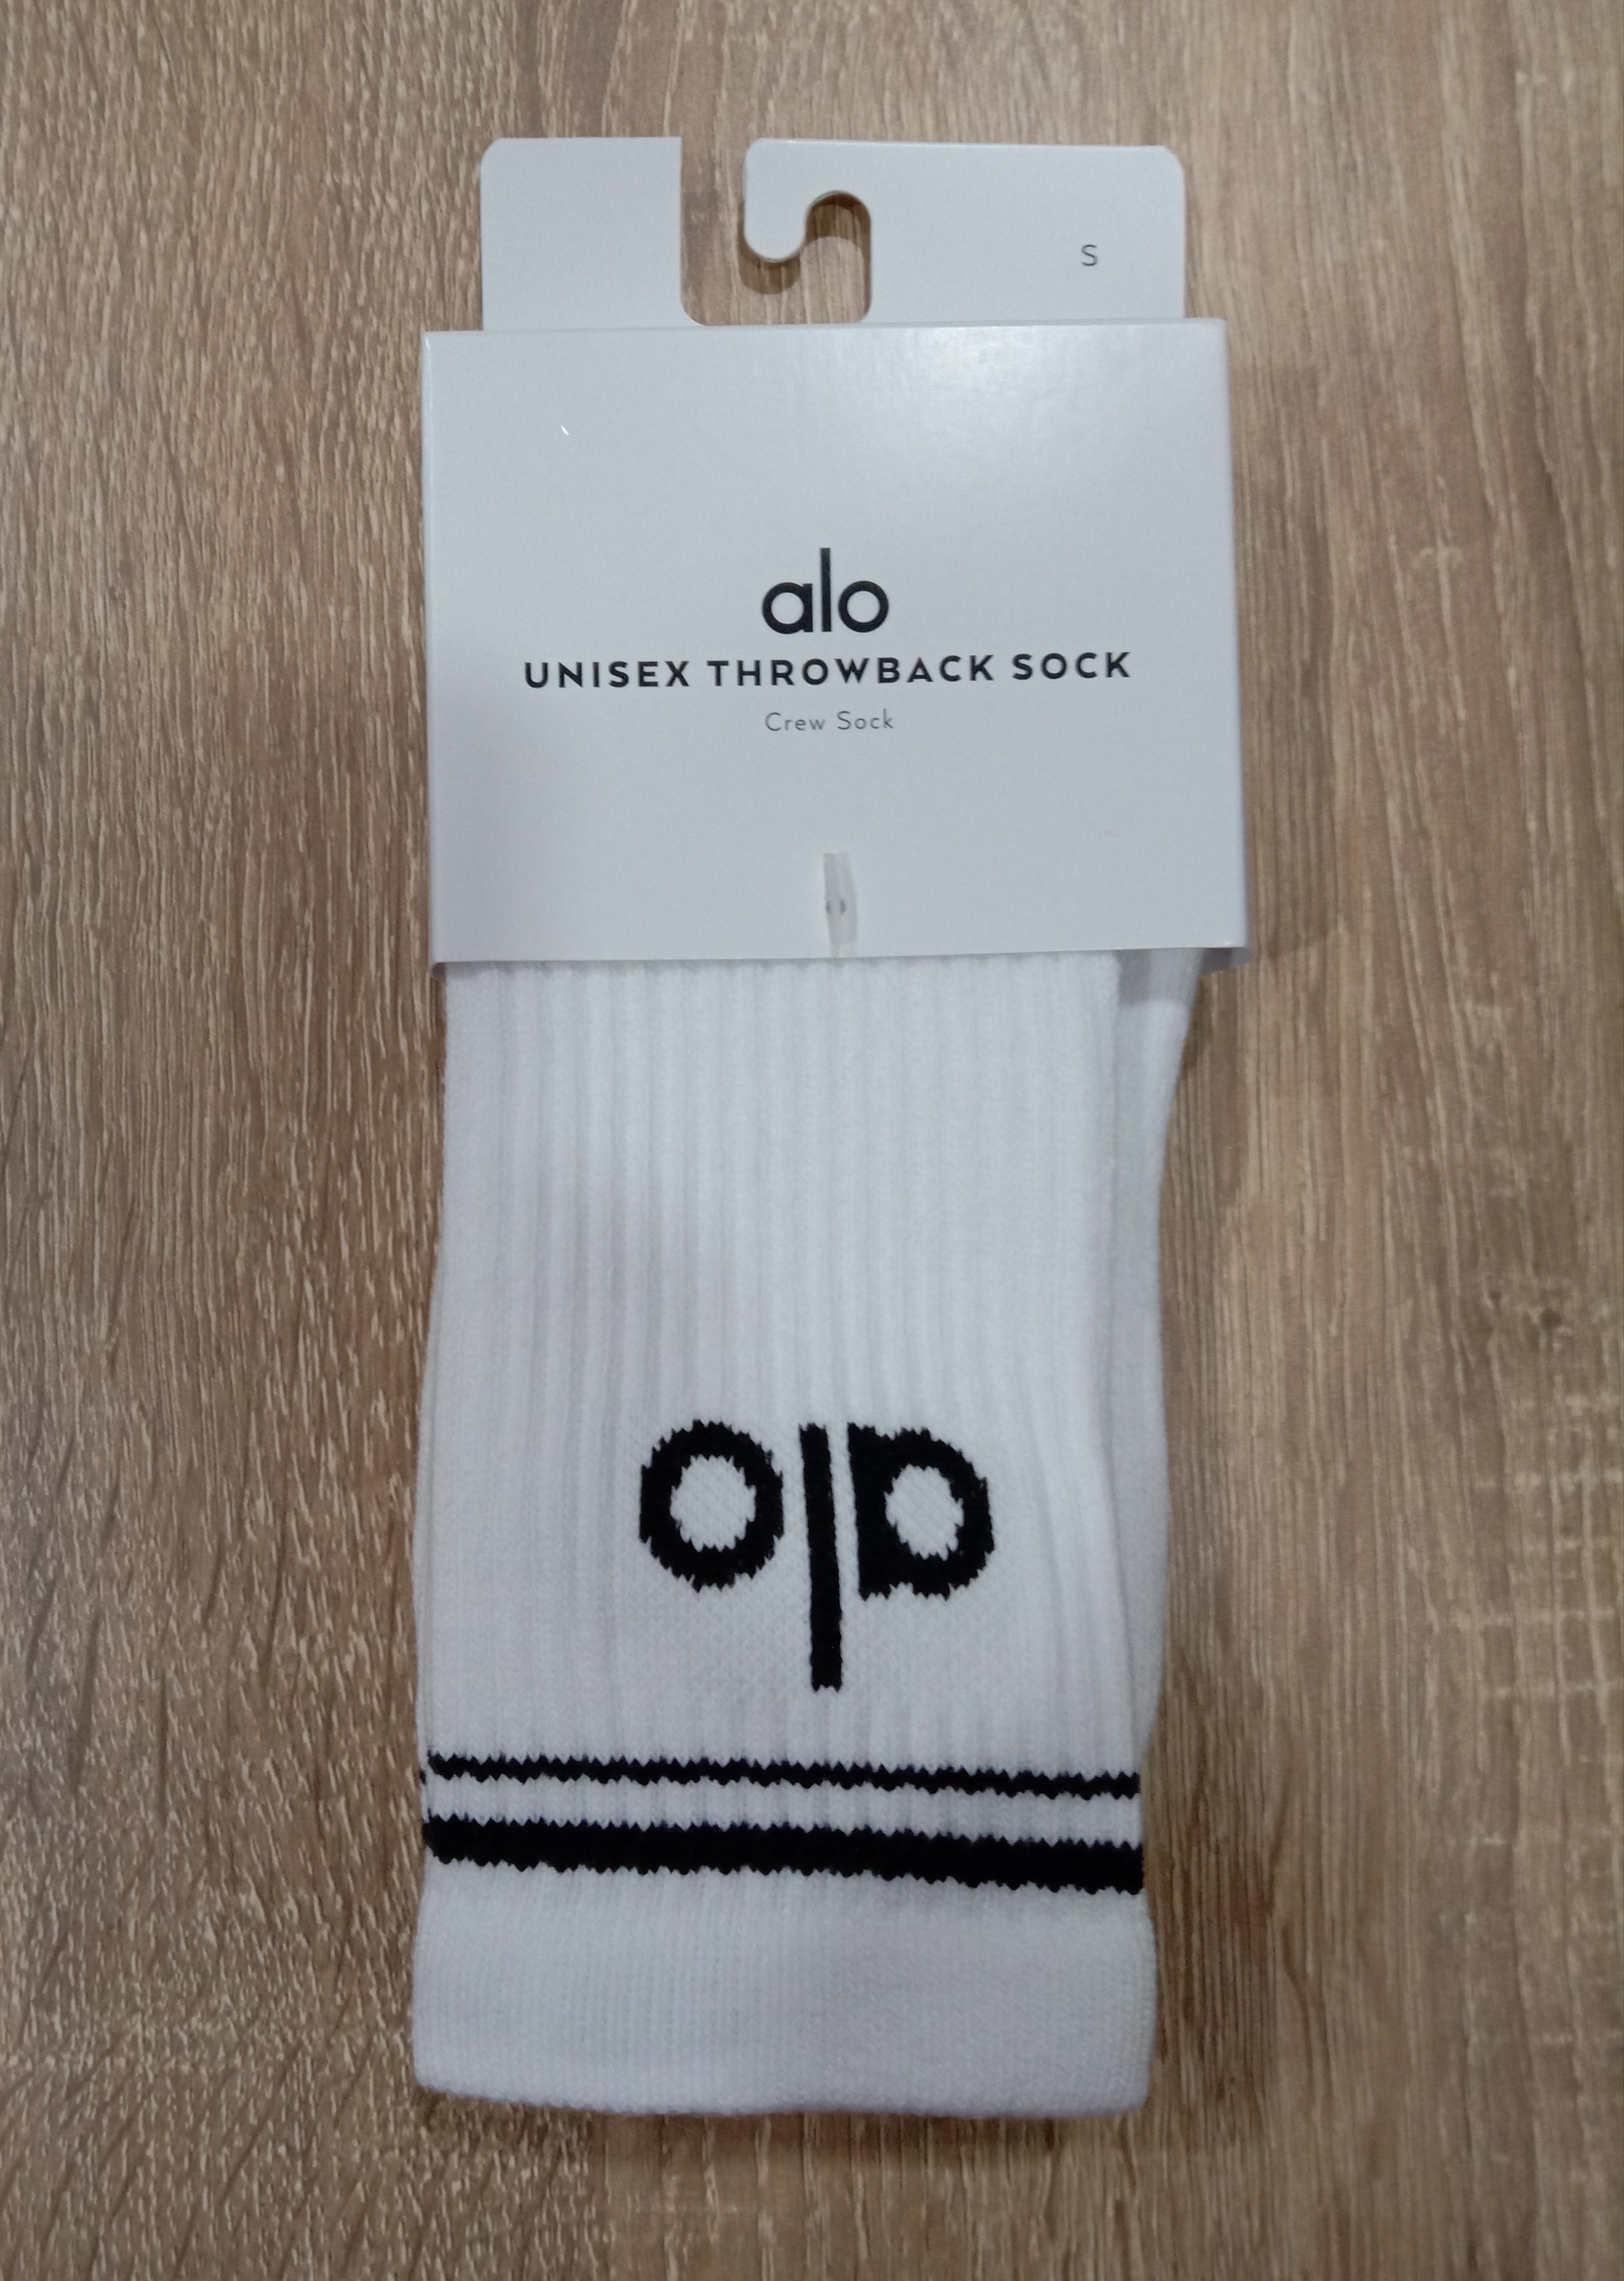 Alo Men's Street Sock - Black/White - Medium/Large | Cotton